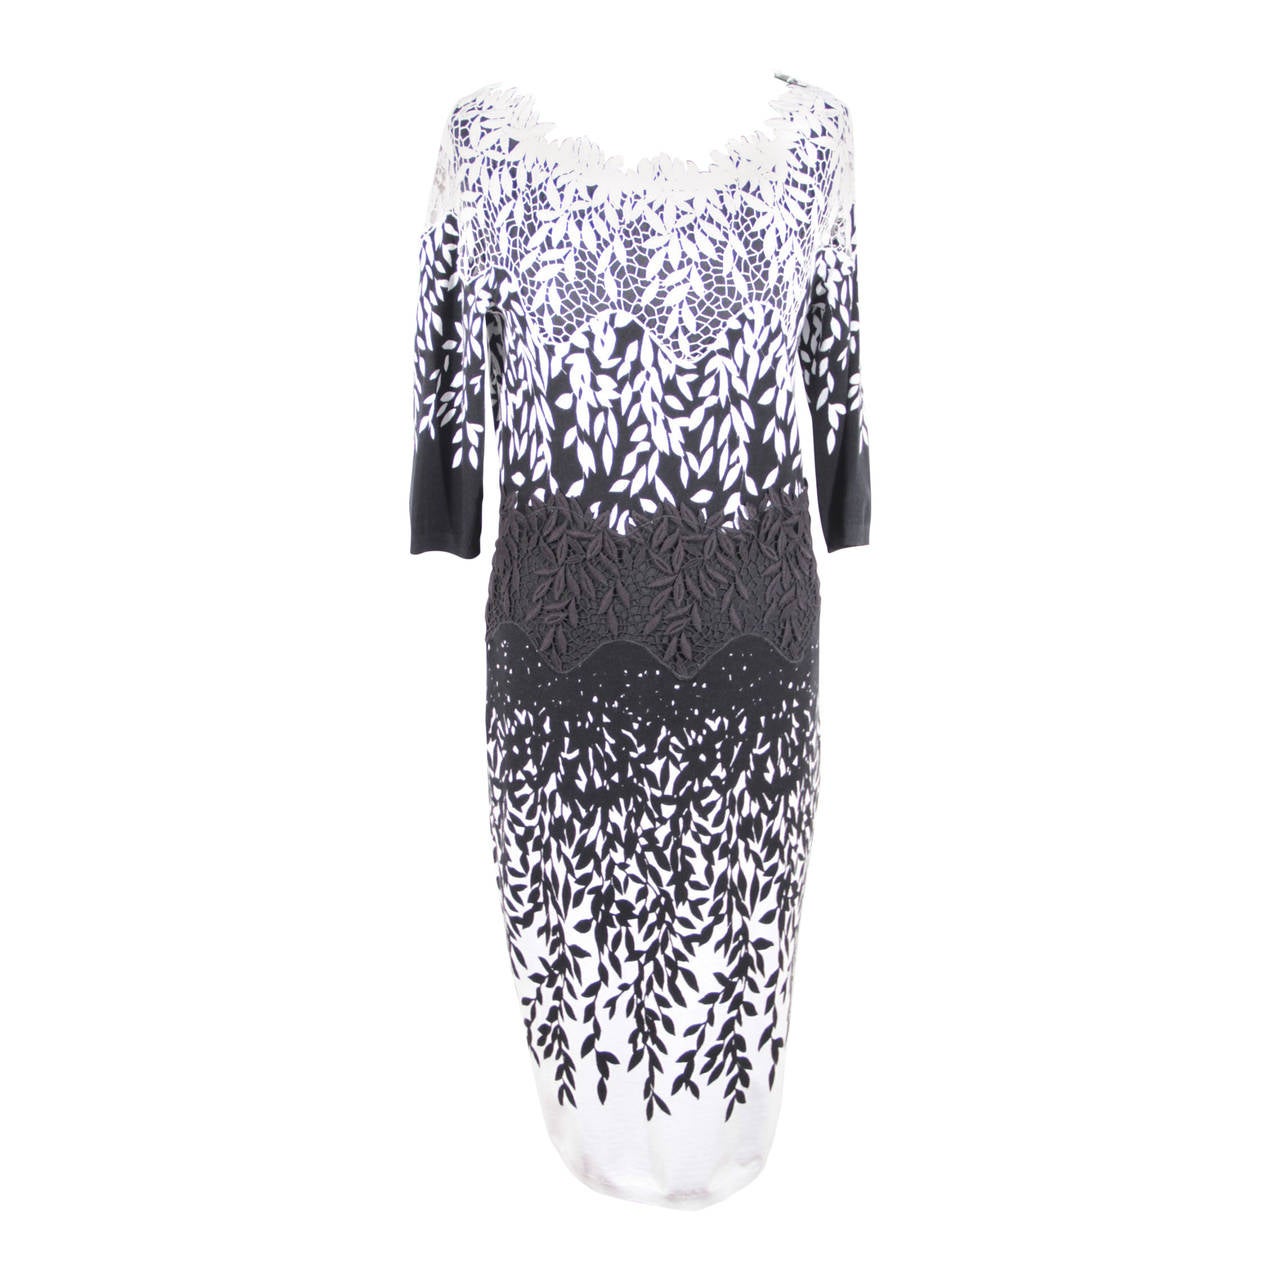 BLUMARINE Black & White SHEATH DRESS 3/4 Sleeves w/ LACE Inserts SIZE 44 IT